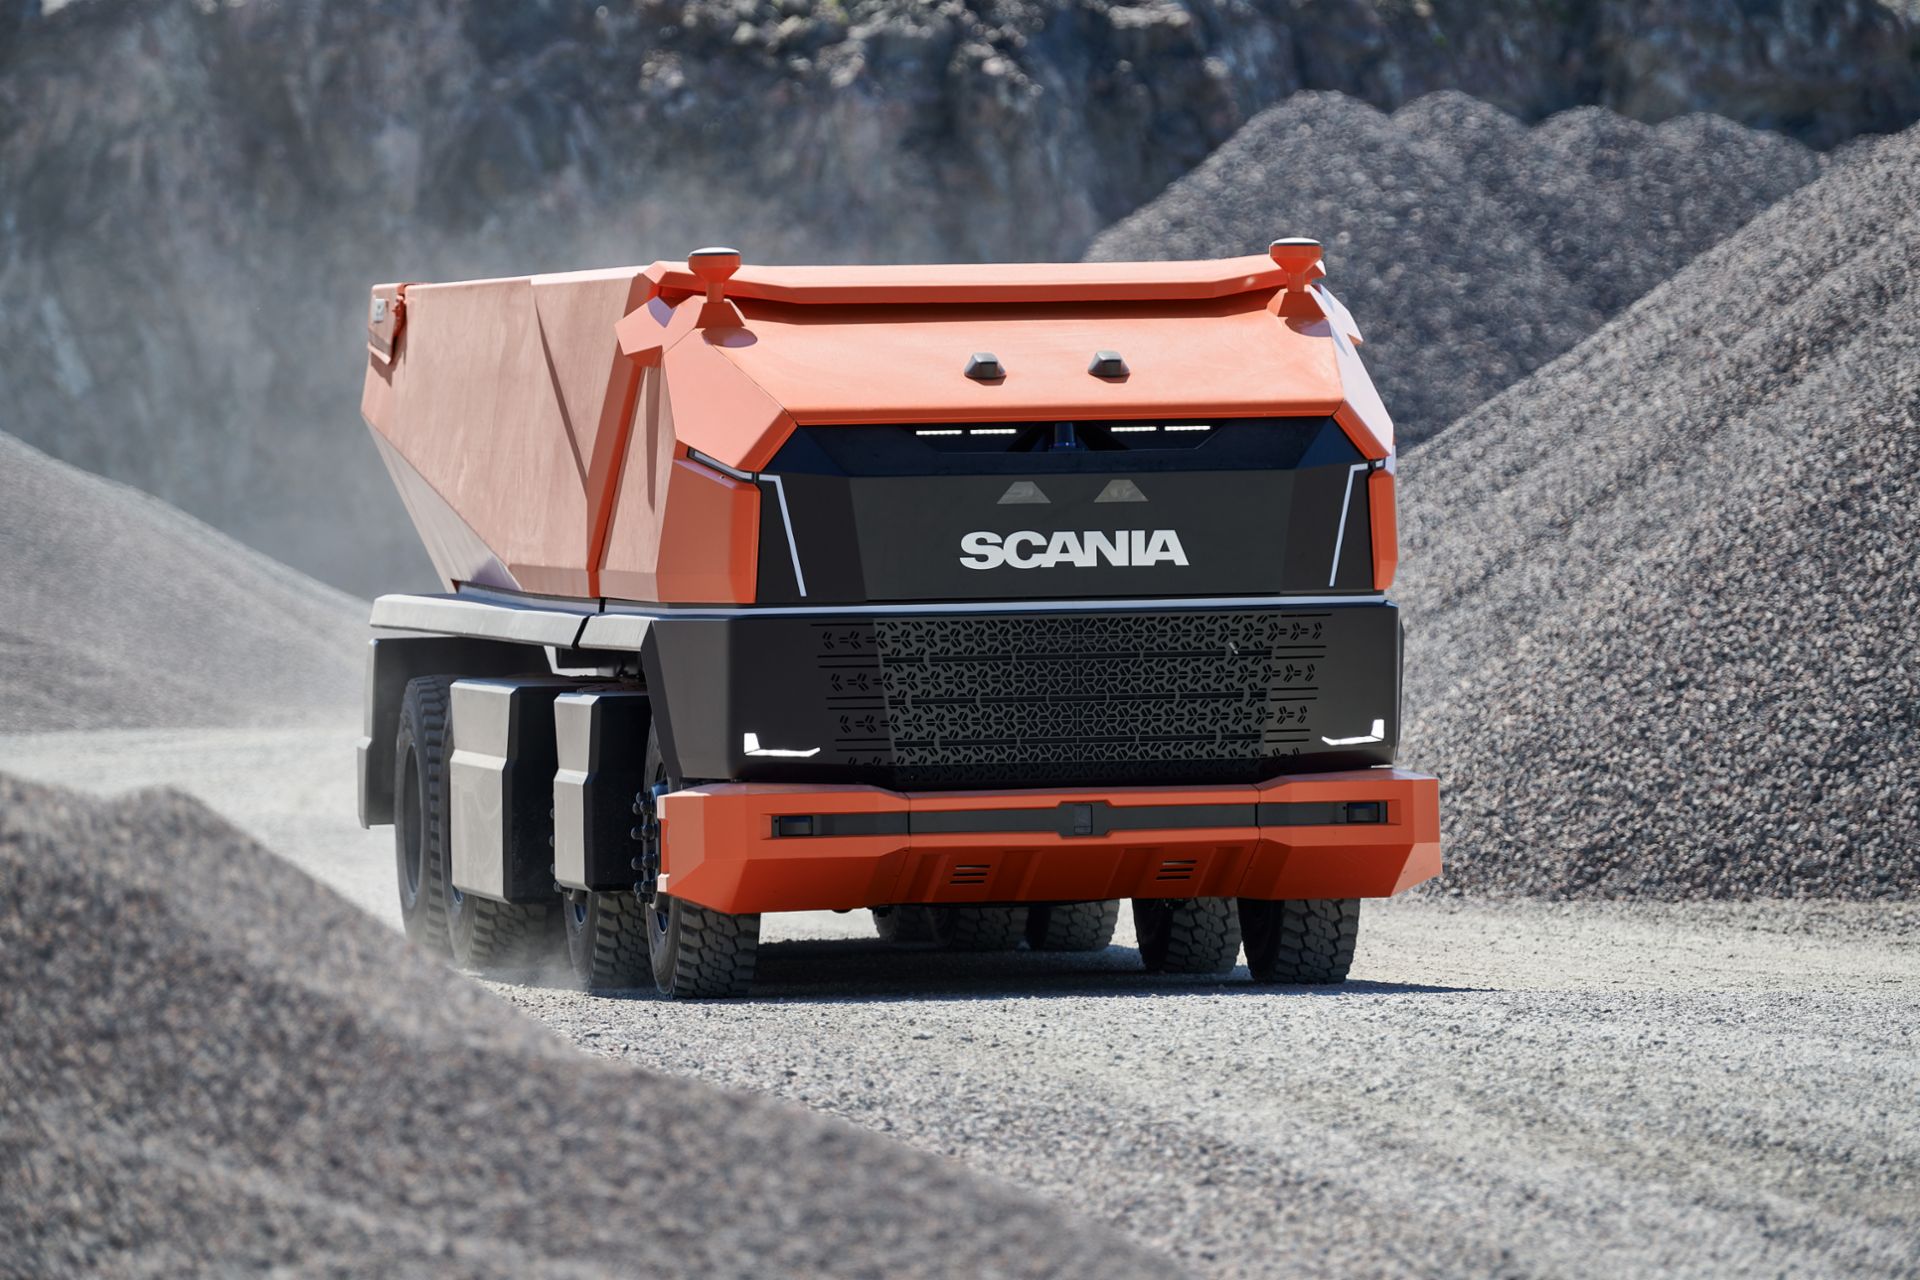 The Scania AXL autonomous concept vehicle in an excavation pit.